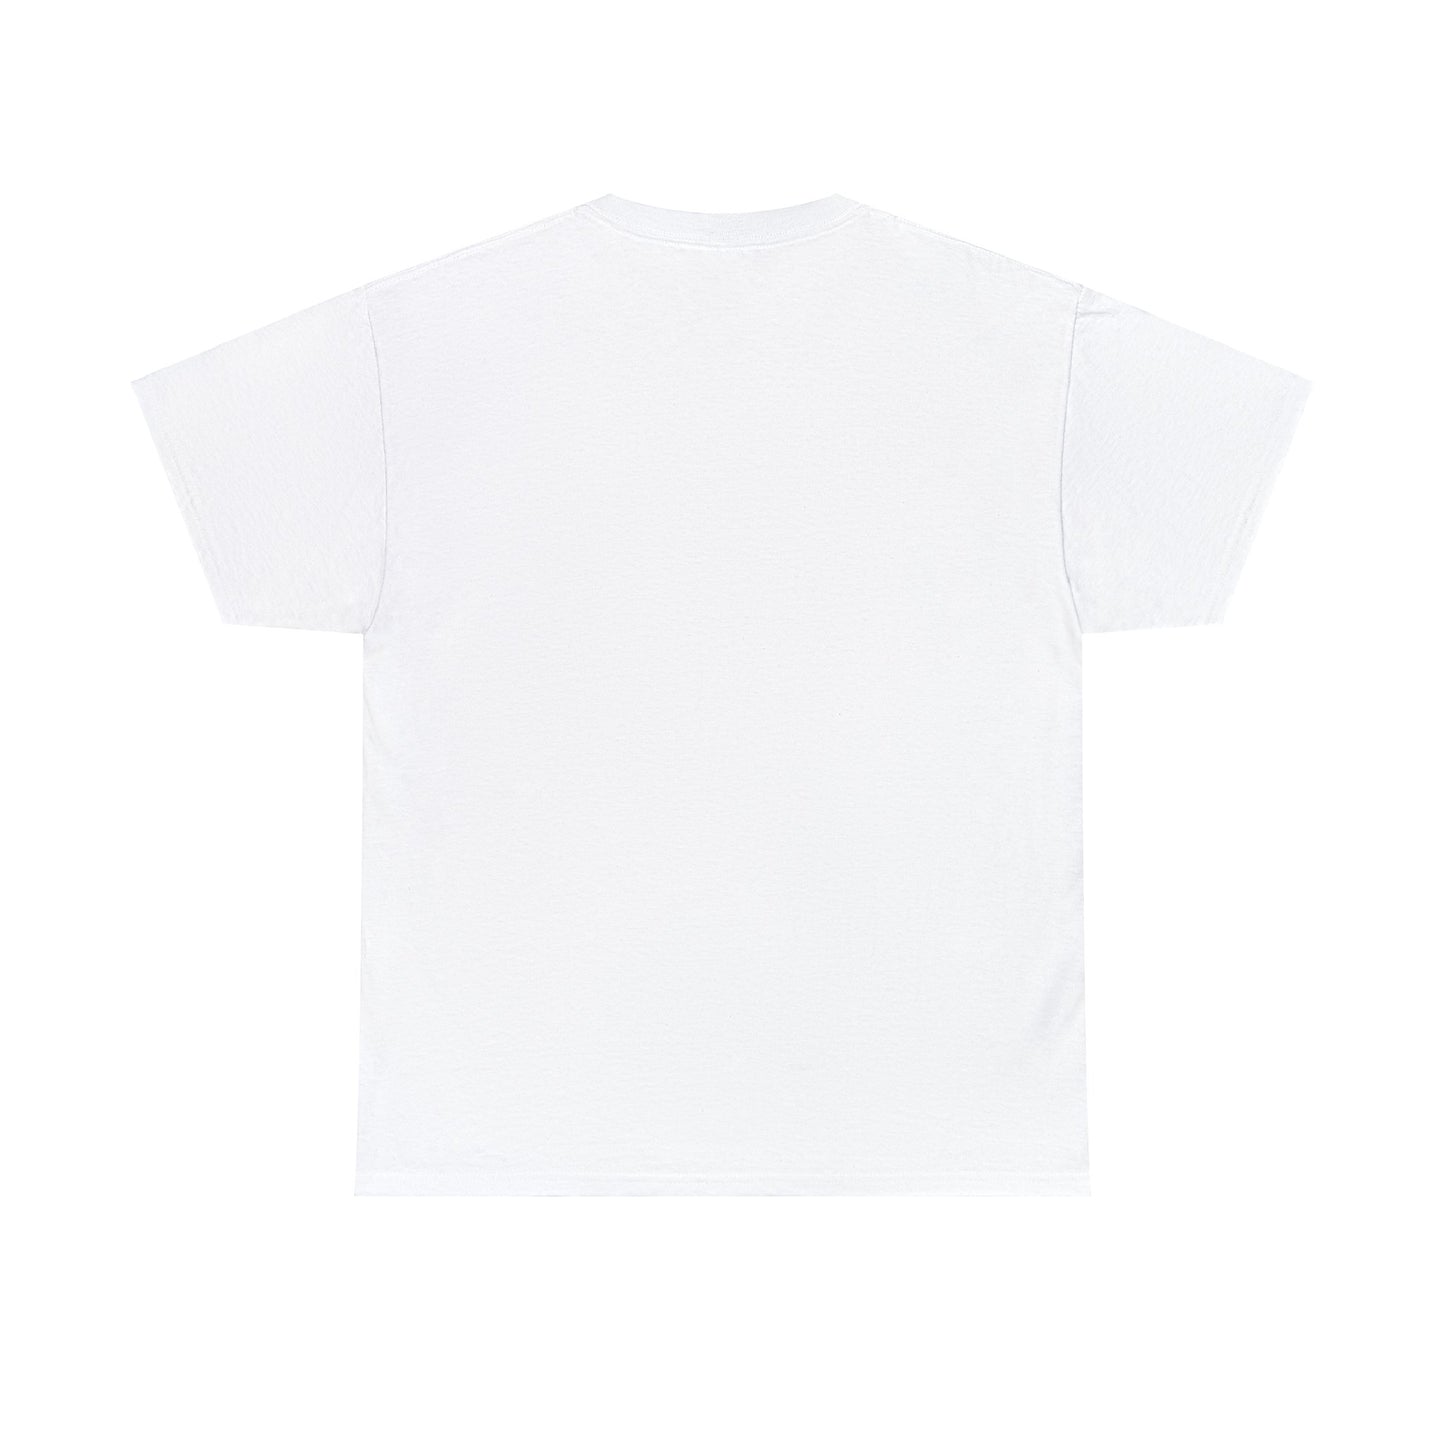 Teach  White Logo Front Back T-Shirt 10 colors  S-5x